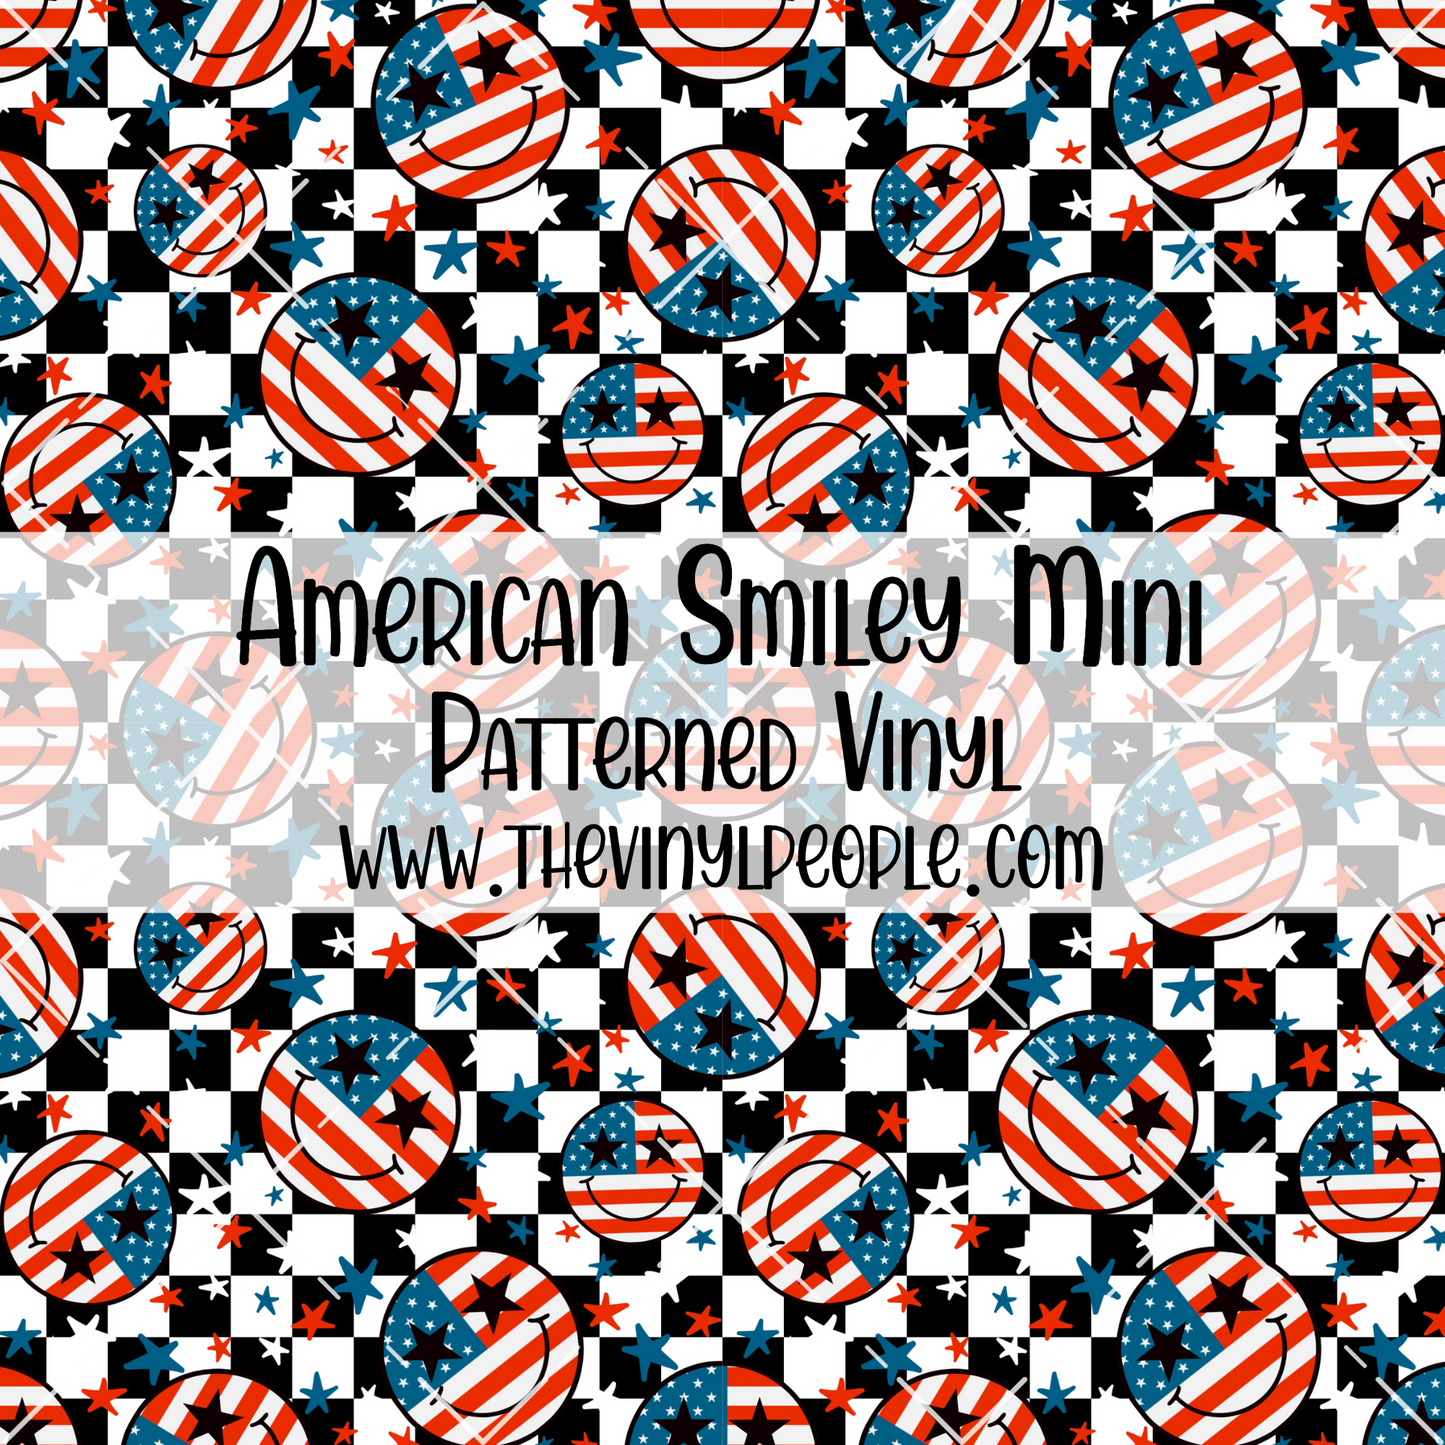 American Smiley Patterned Vinyl